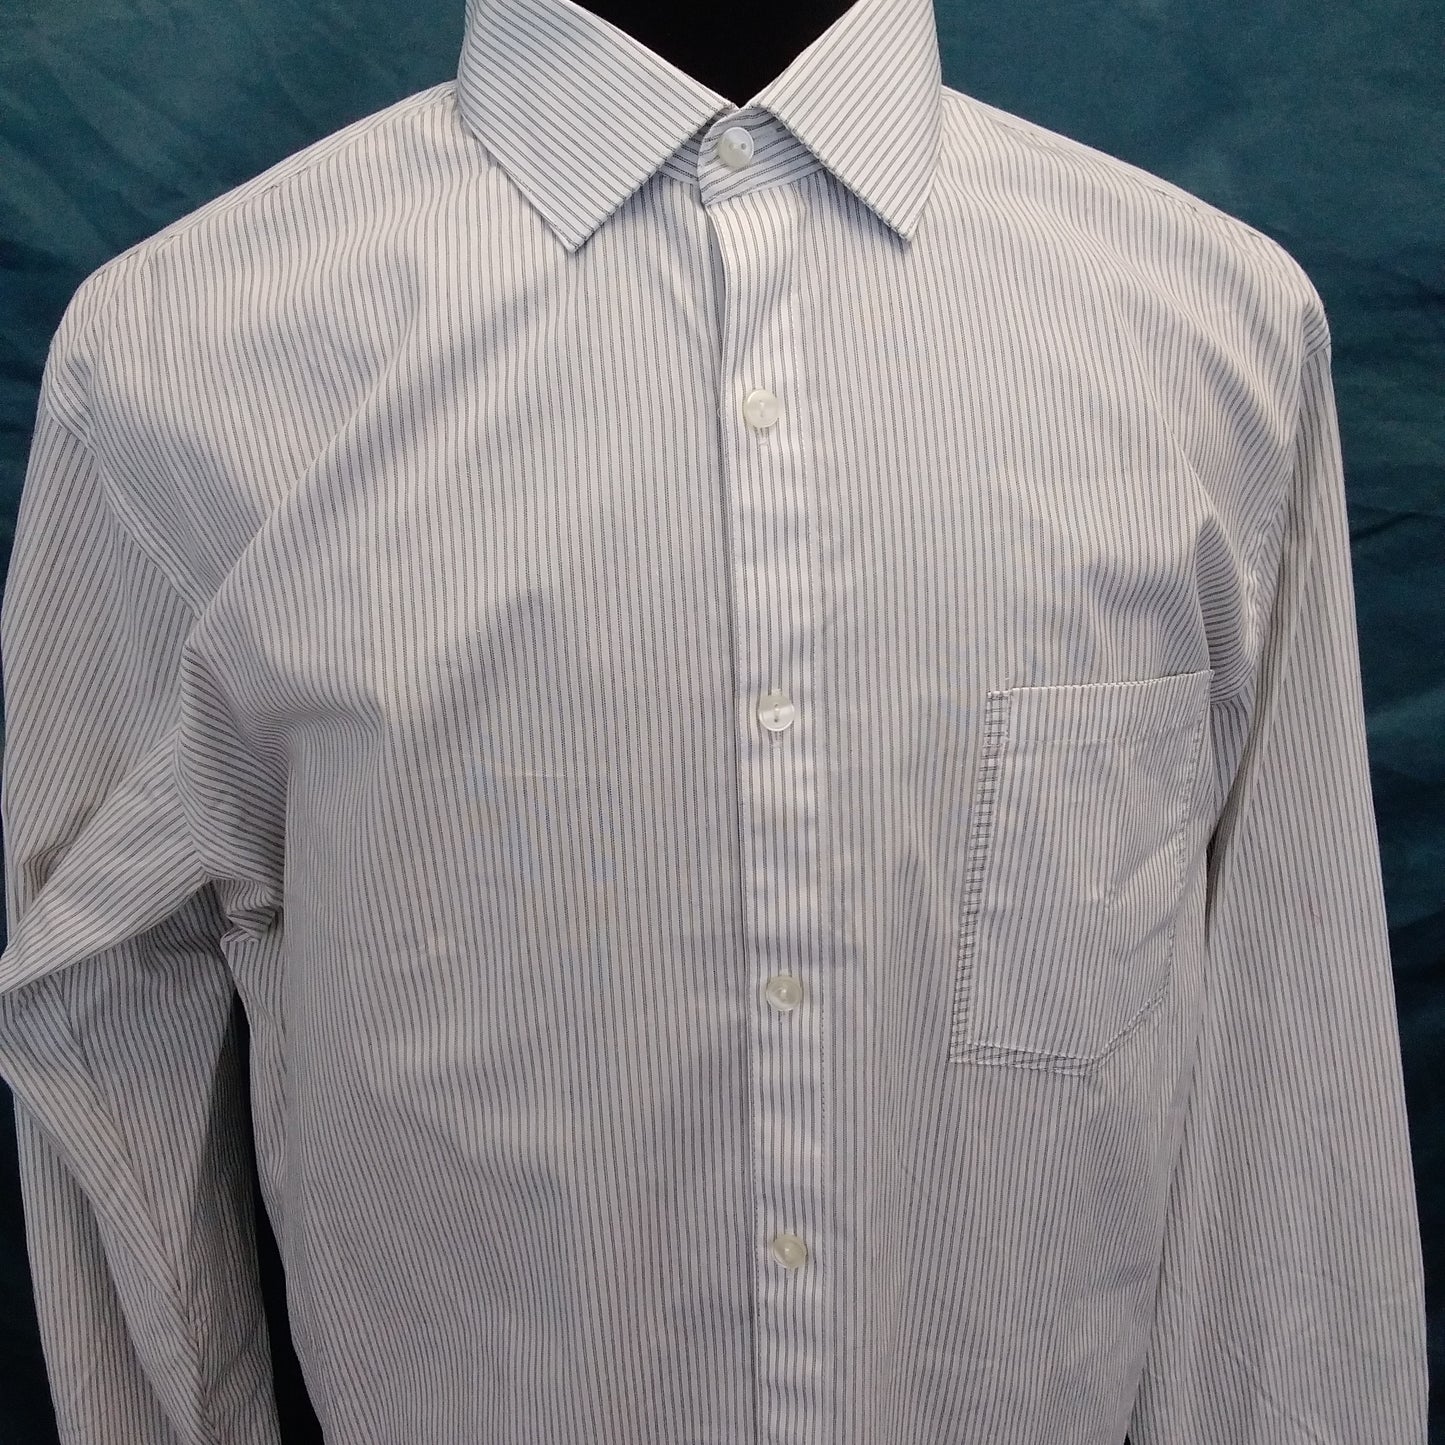 NWT - Van Heusen White Studio Slim Fit Button Down Shirt - 16.5 34-35